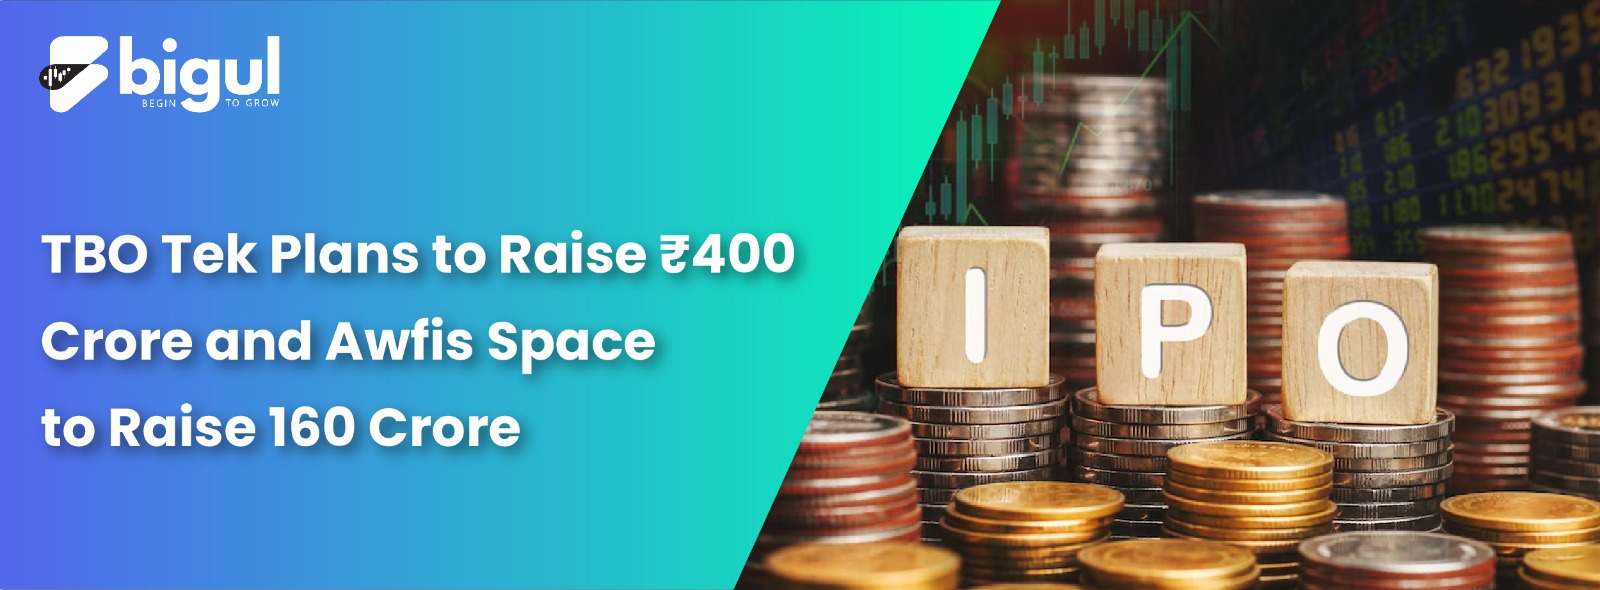 TBO Tek Plans to Raise ₹400 Crore and Awfis Space to Raise 160 Crore